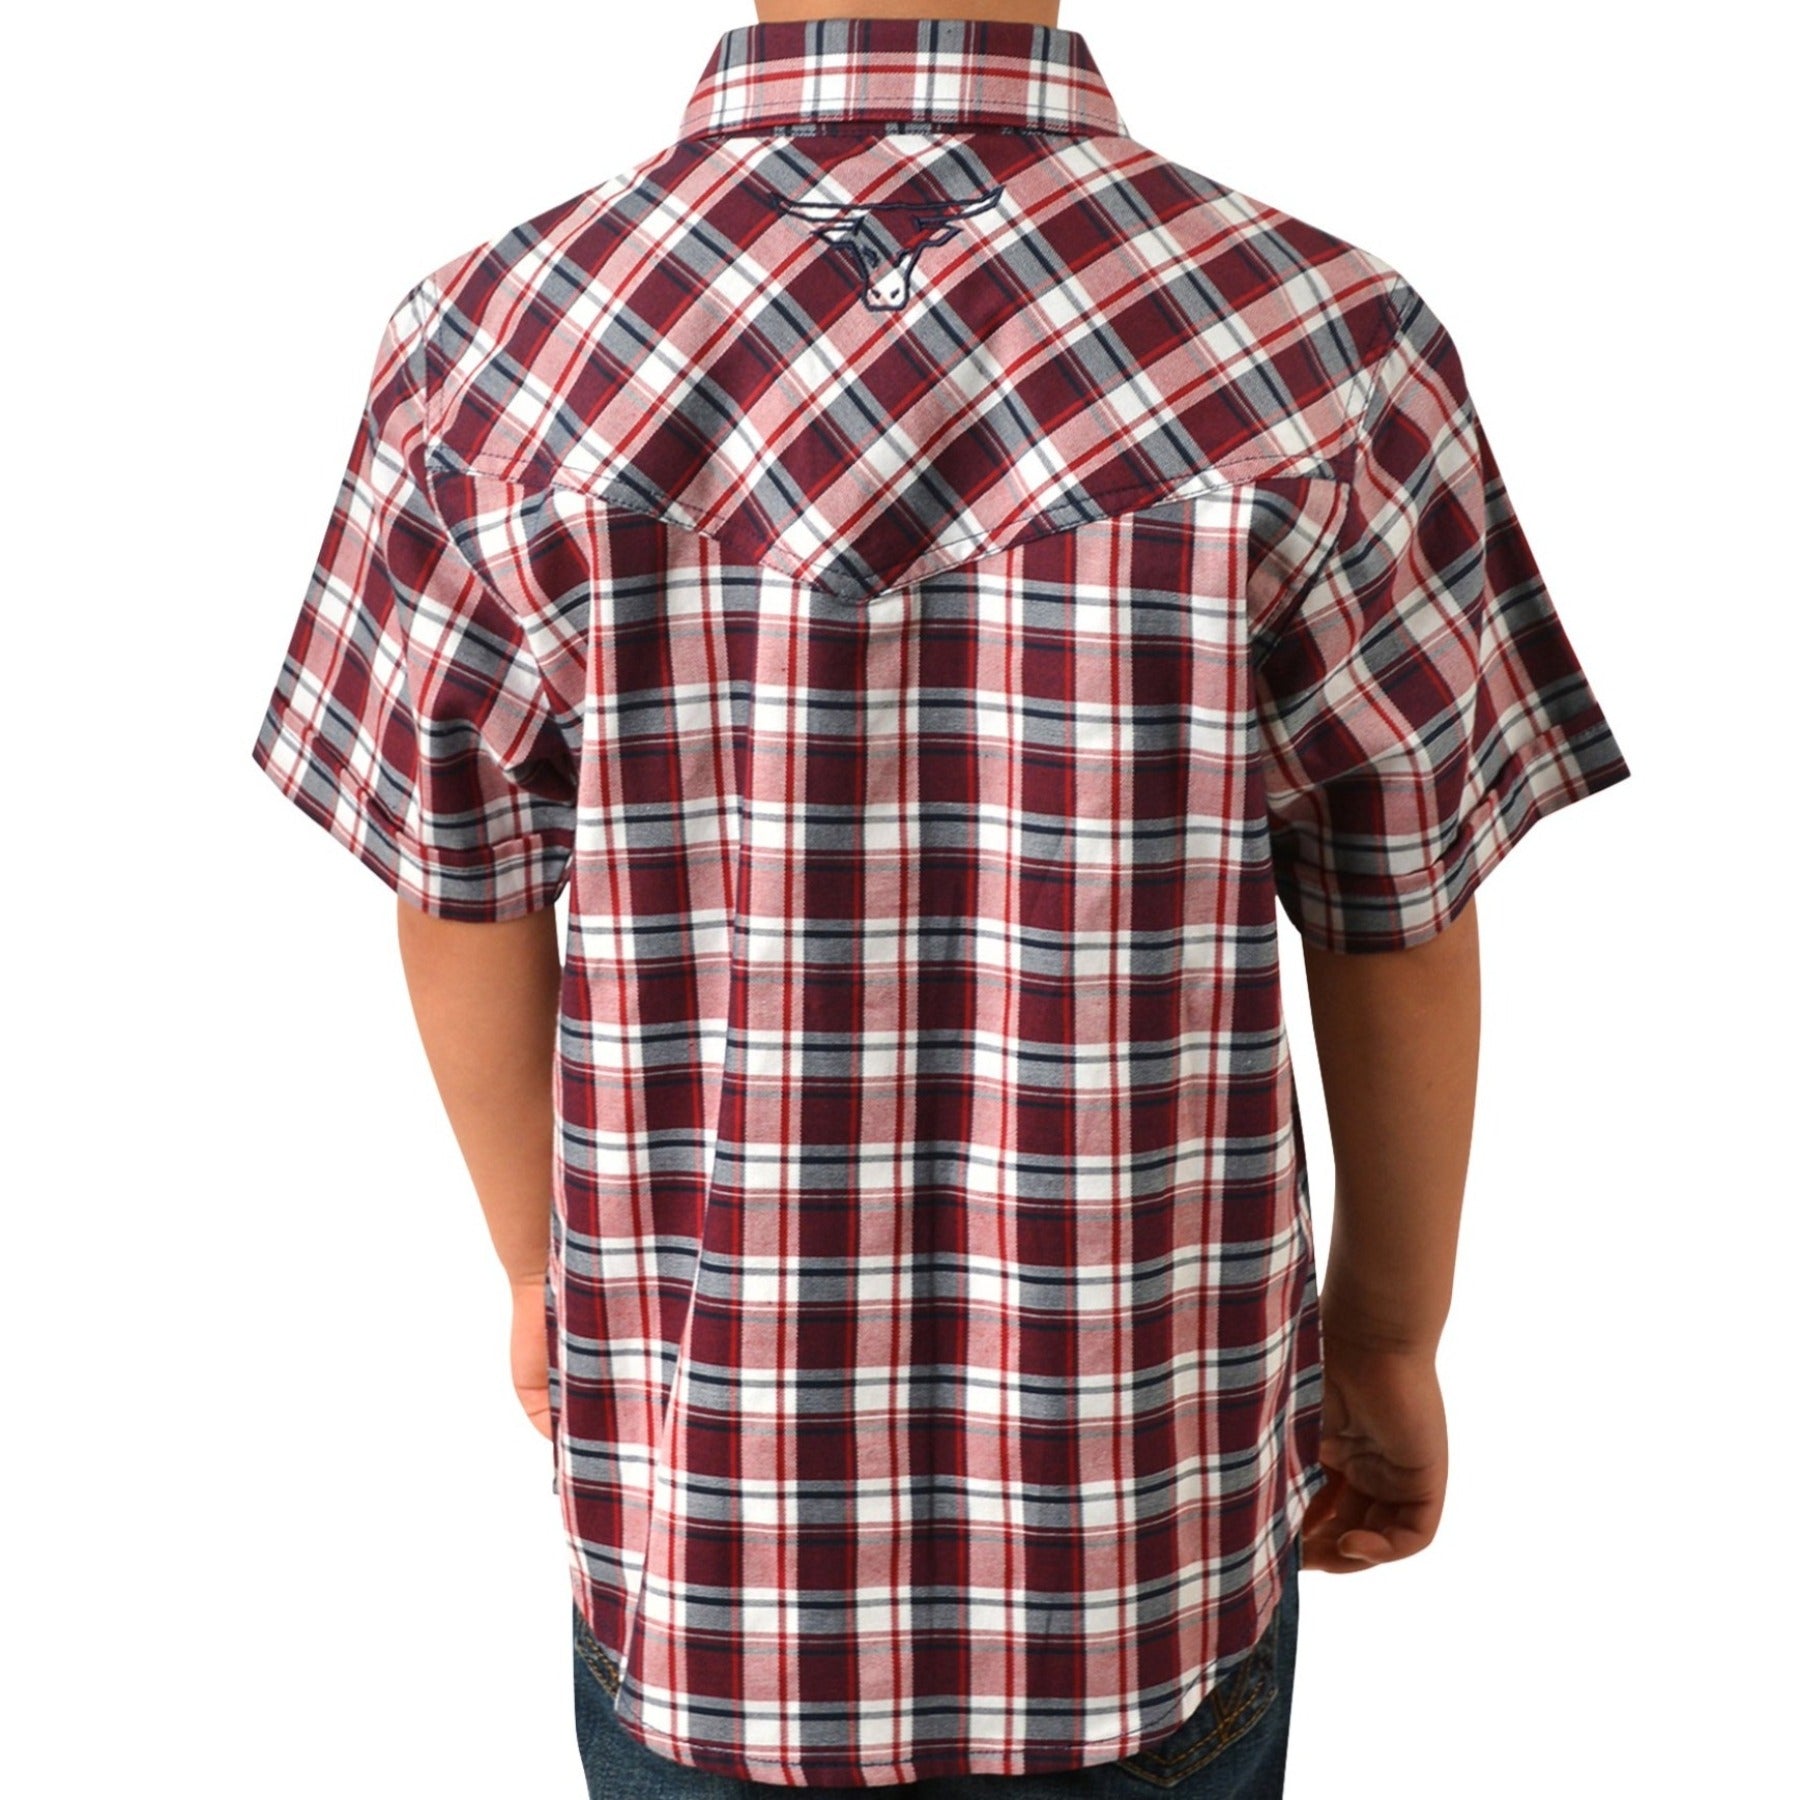 Boy’s Edward Check Western Short Sleeve Shirt